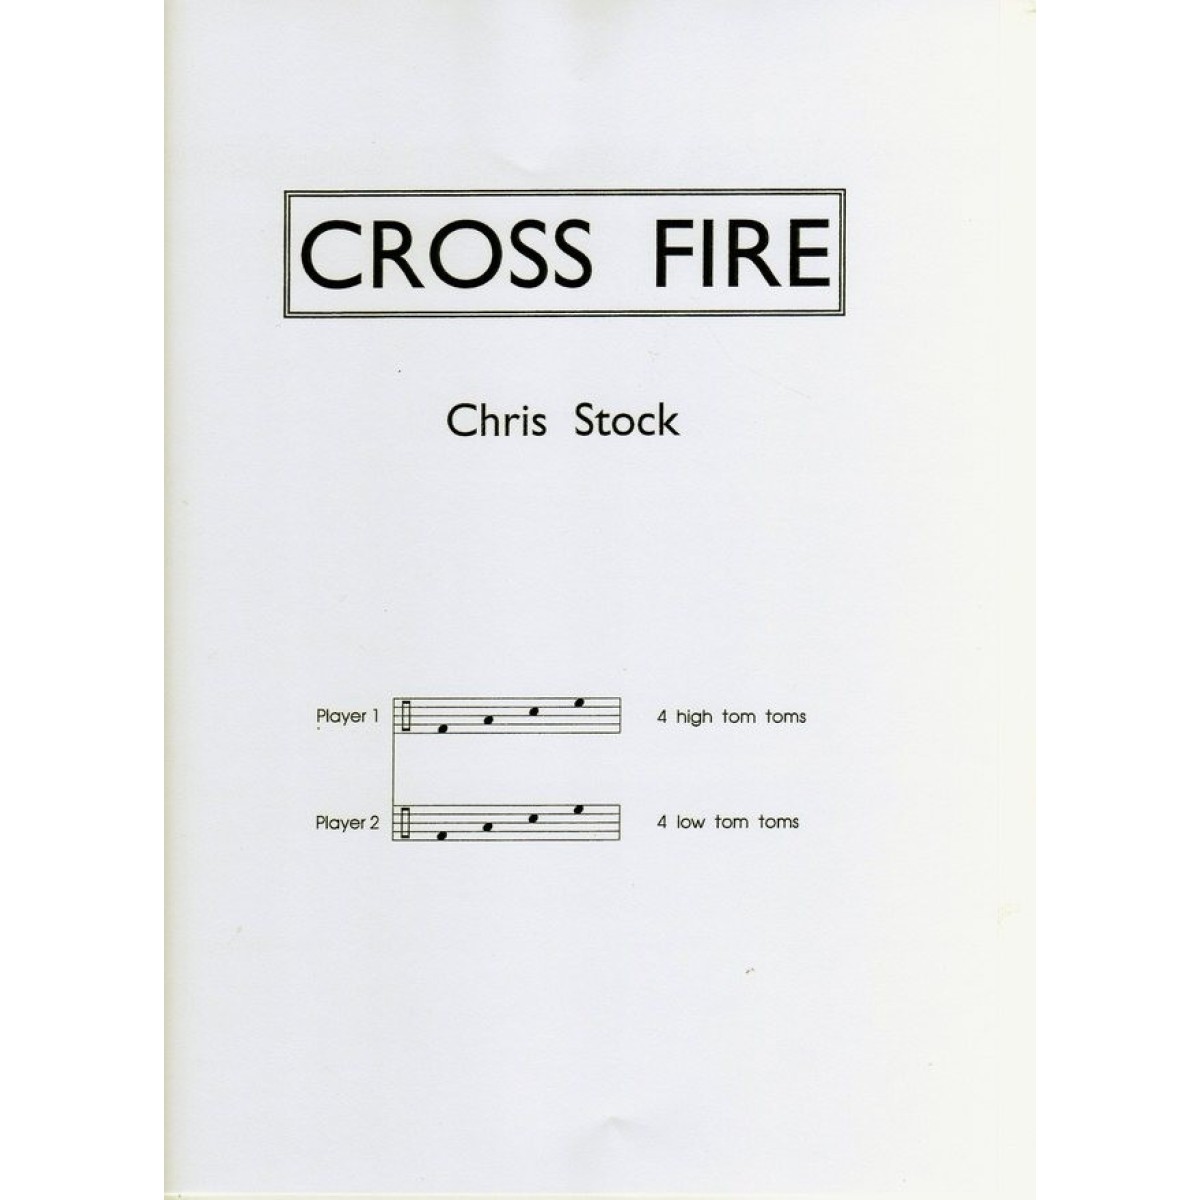 Cross Fire by Chris Stock